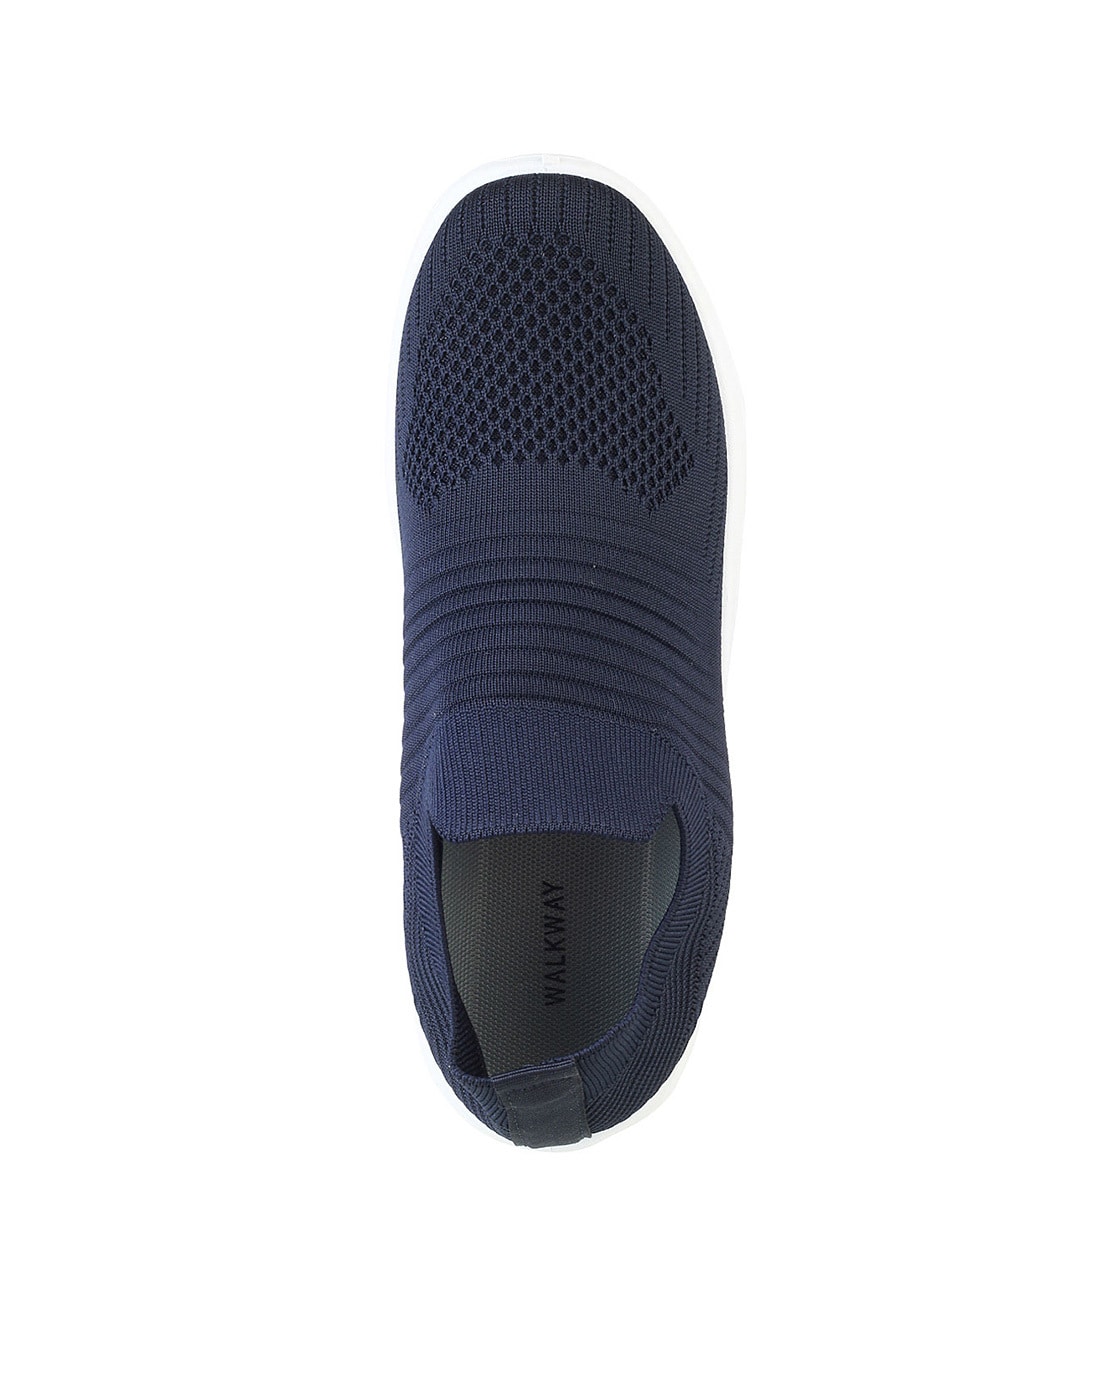 Buy Walkway Black Synthetic Solid Sandals Online